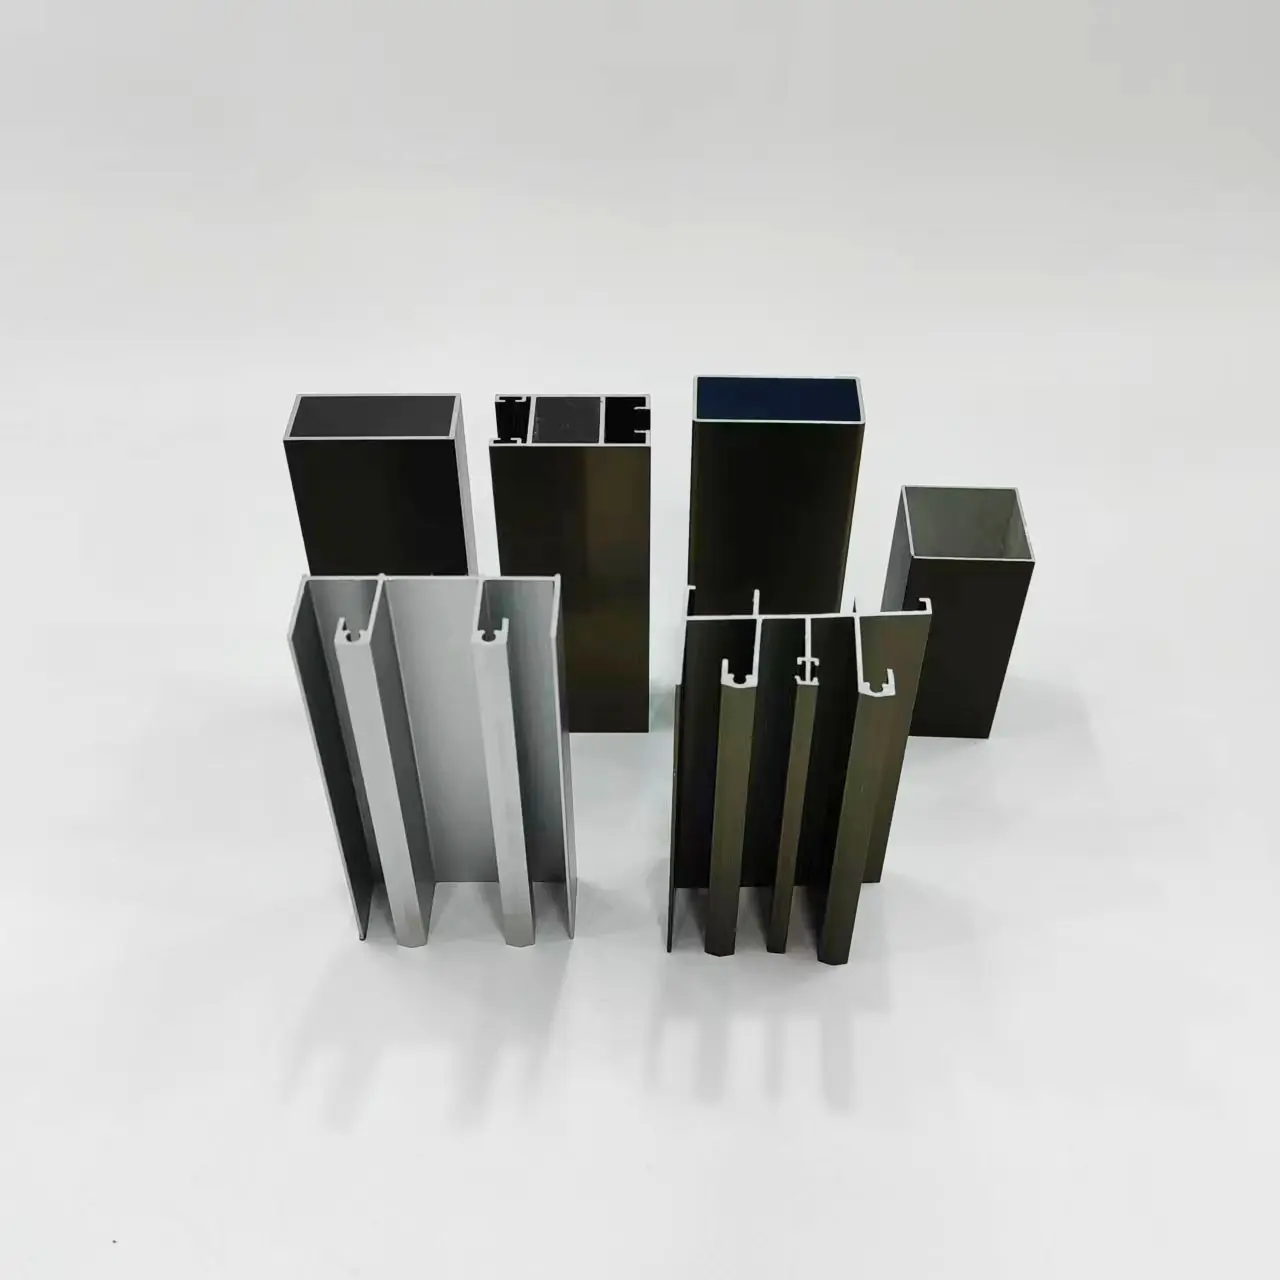 Shengxin alta calidad al por mayor precio competitivo extrusión aleación de aluminio anodizado plata oficinas escritorio perfiles de aluminio